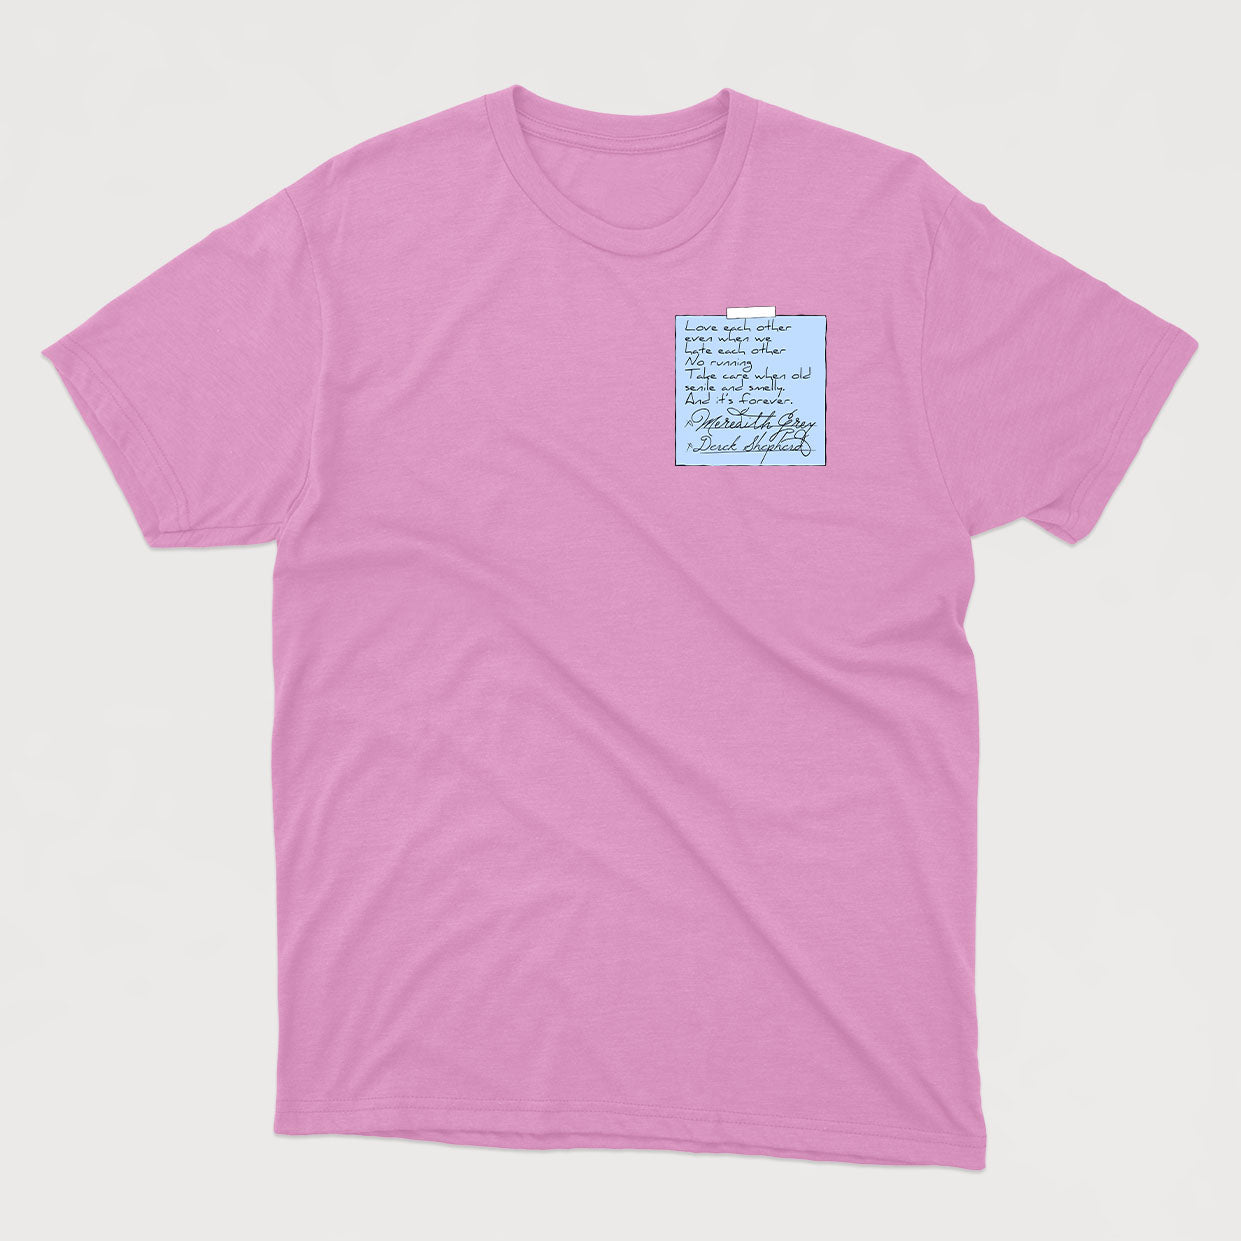 T-shirt GREY’S ANATOMY unisexe - tamelo boutique